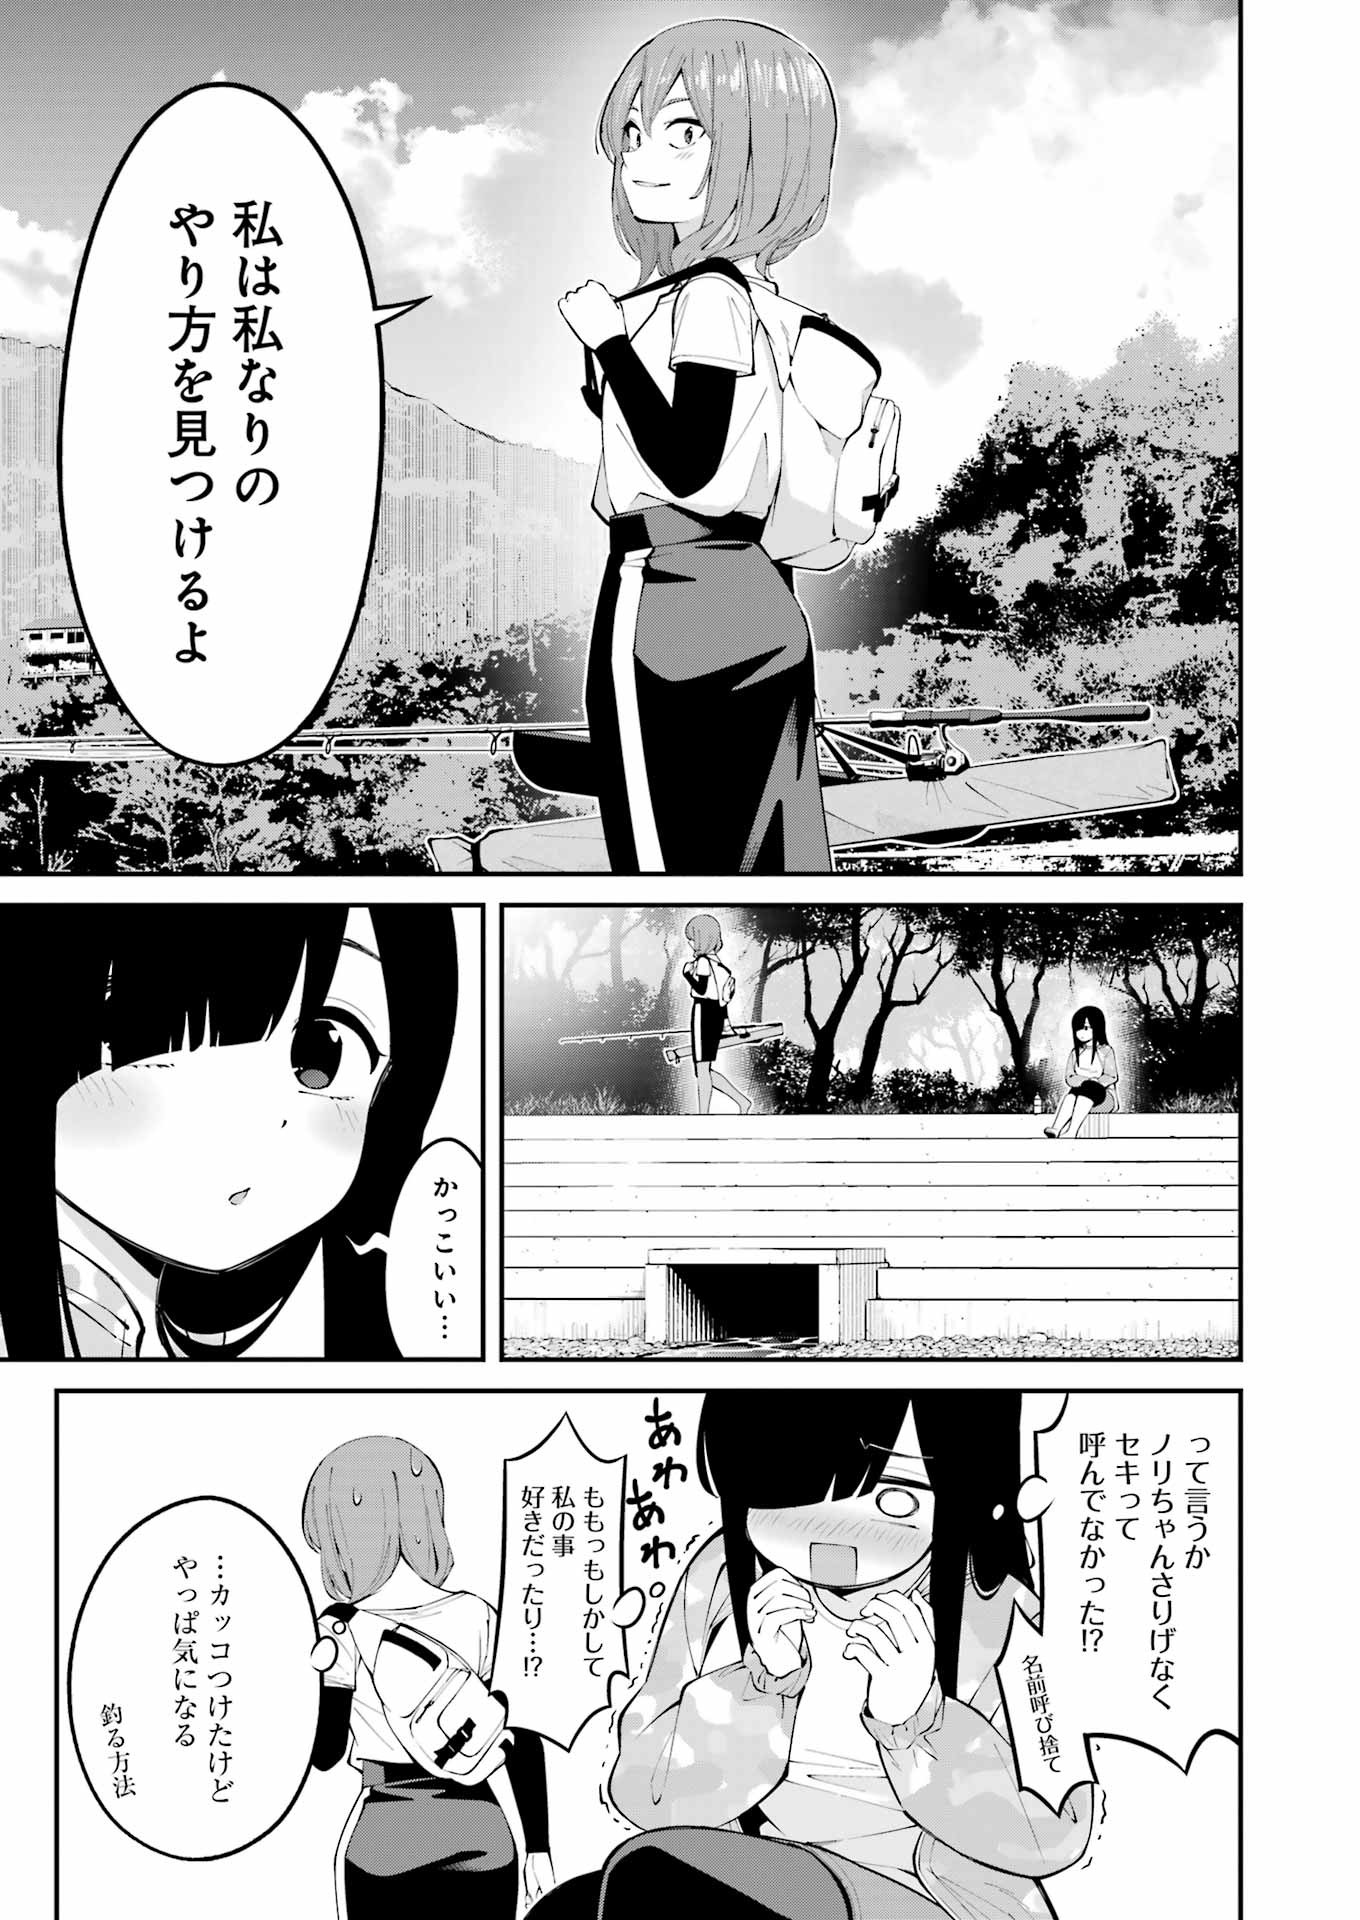 Tsuri Komachi - Chapter 50 - Page 3